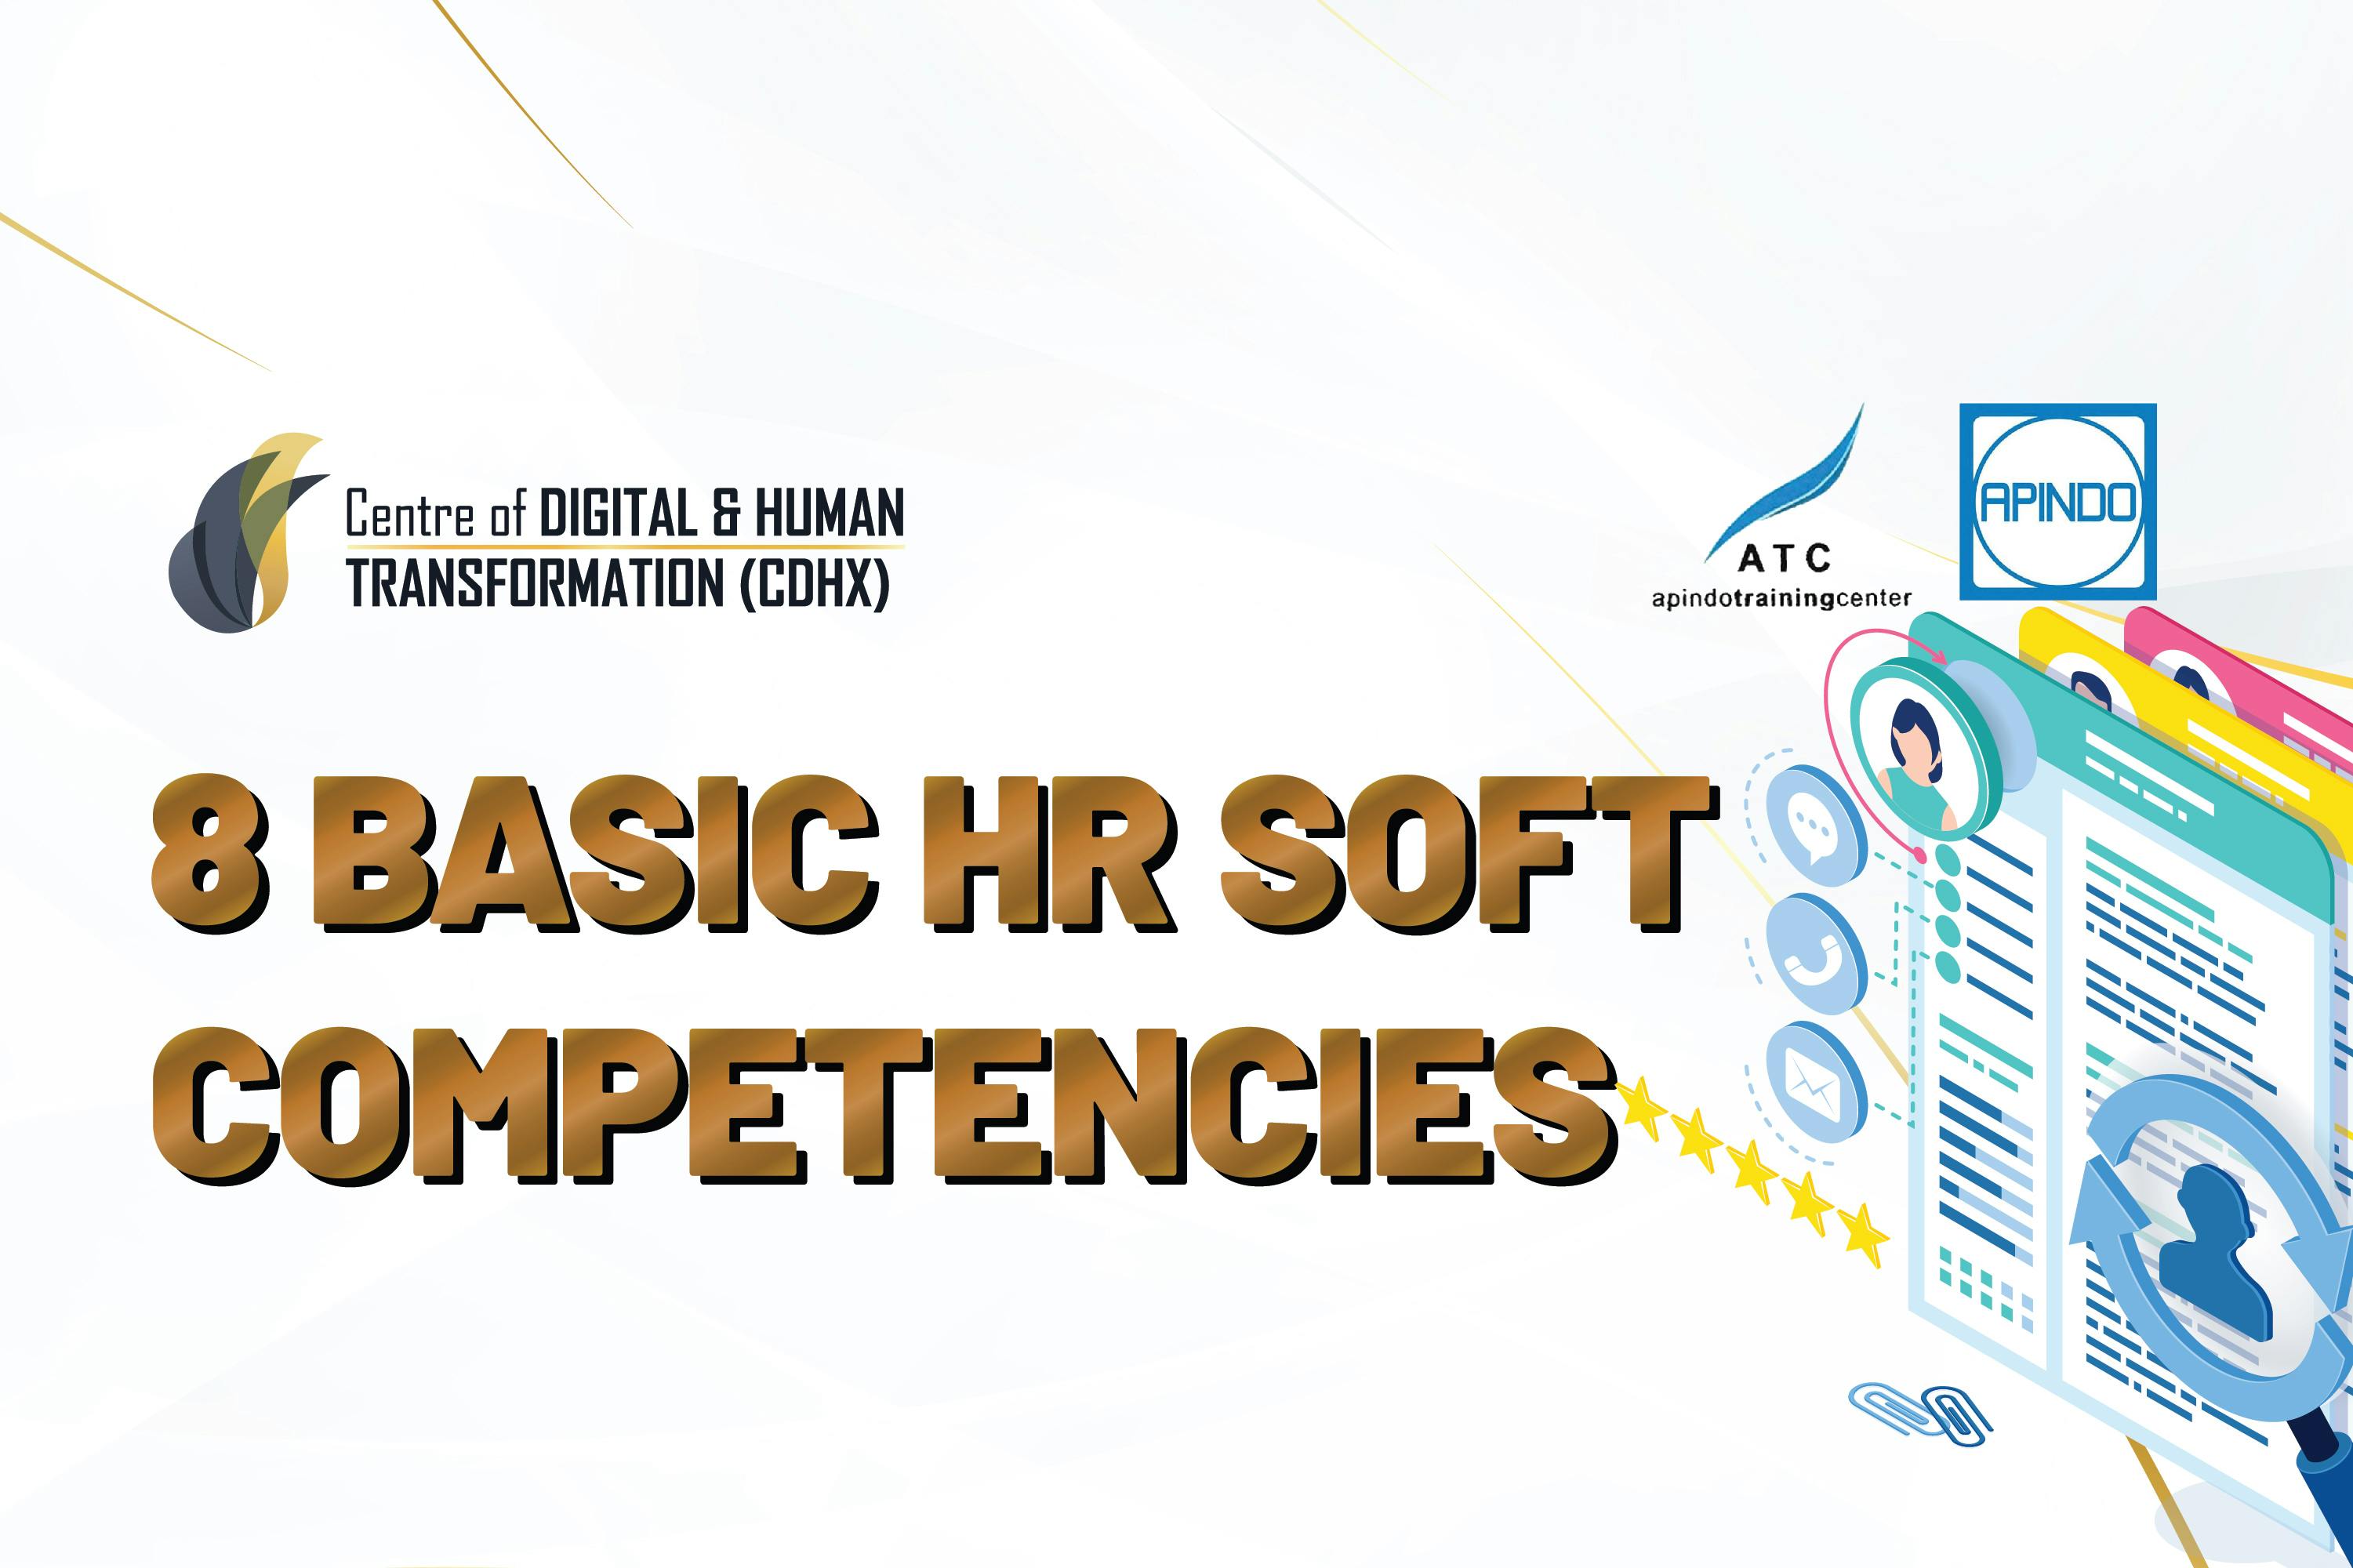 8 Basic HR Soft Competencies